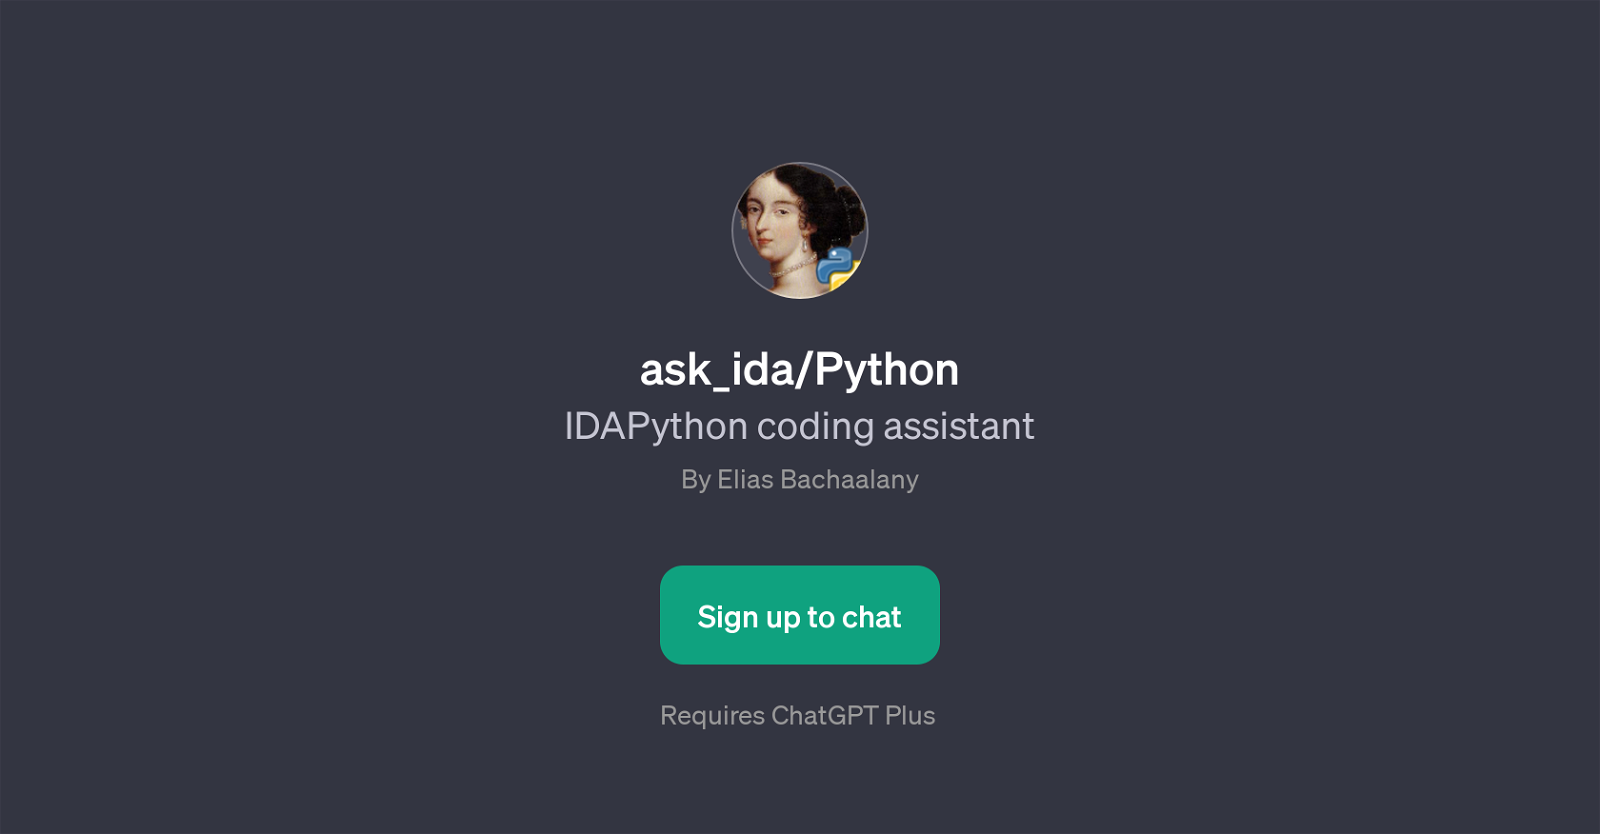 ask_ida/Python website